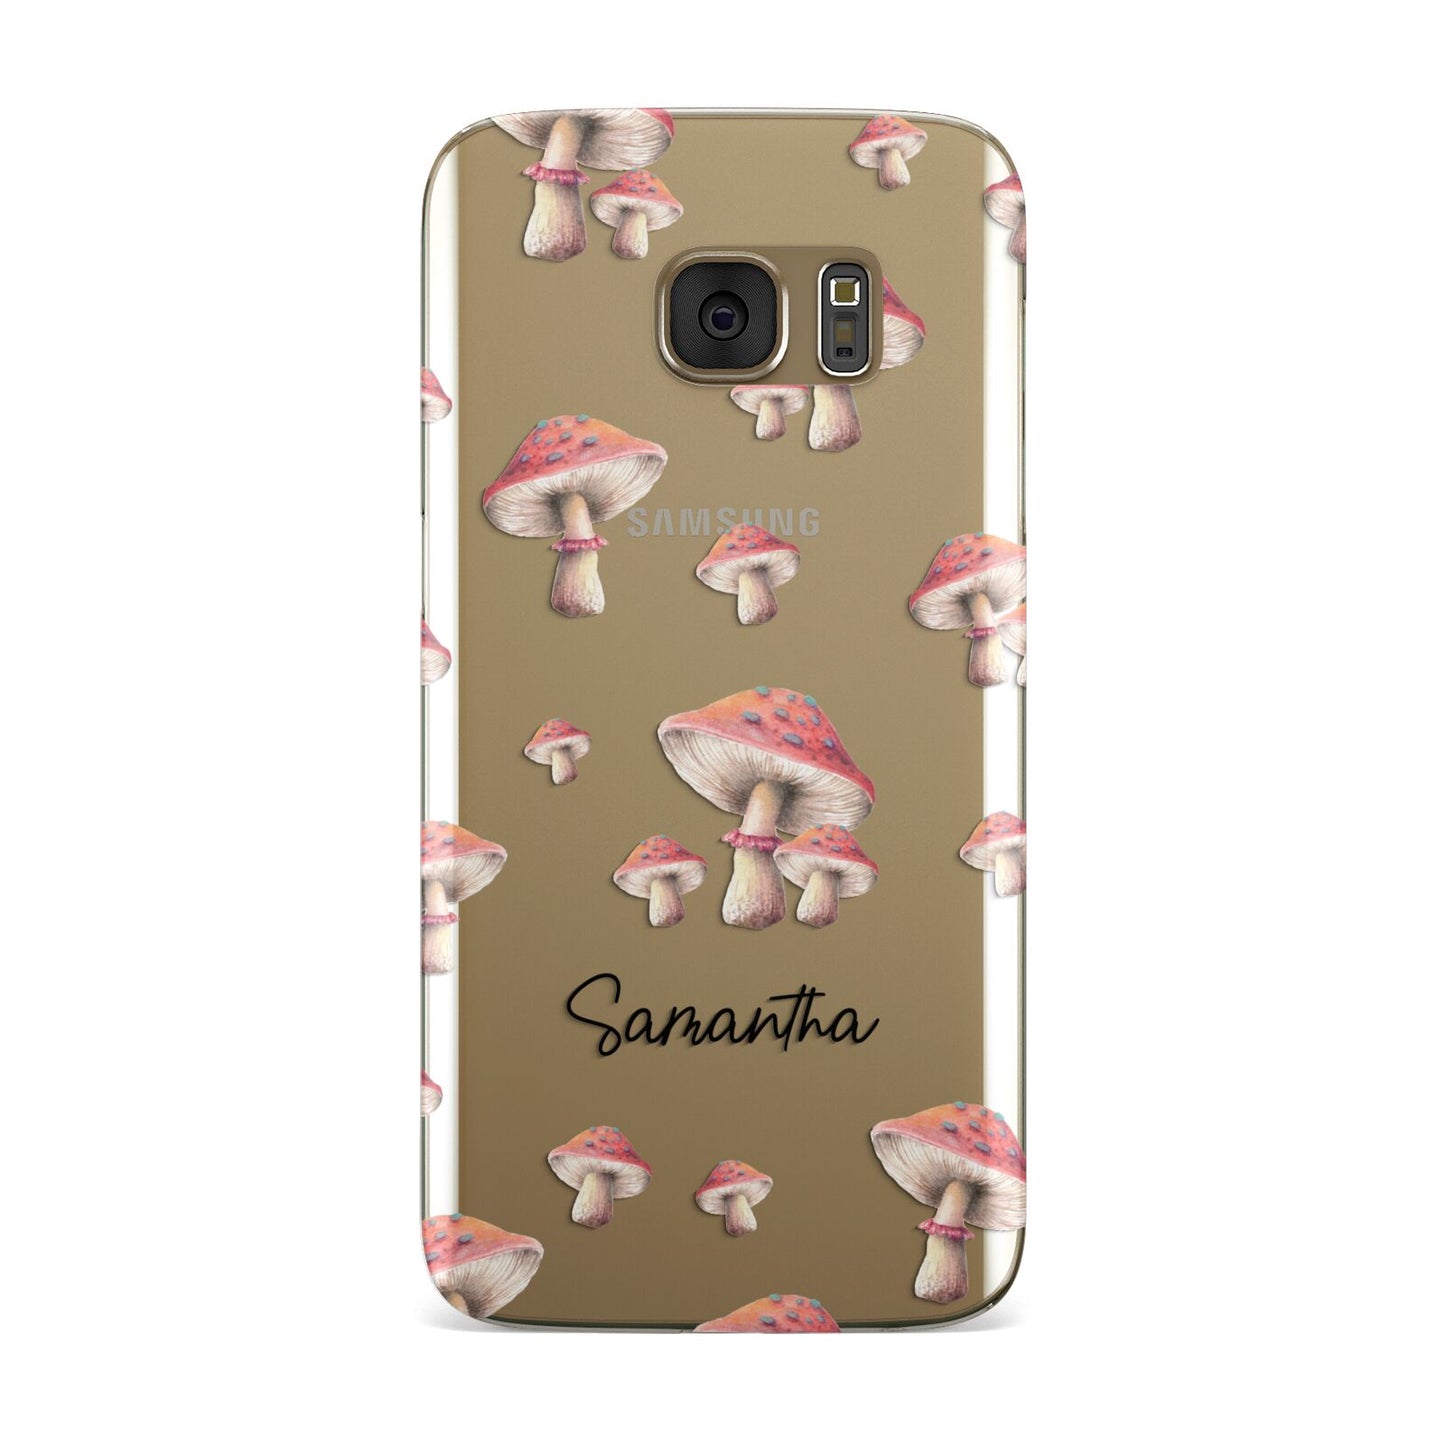 Mushroom Illustrations with Name Samsung Galaxy Case